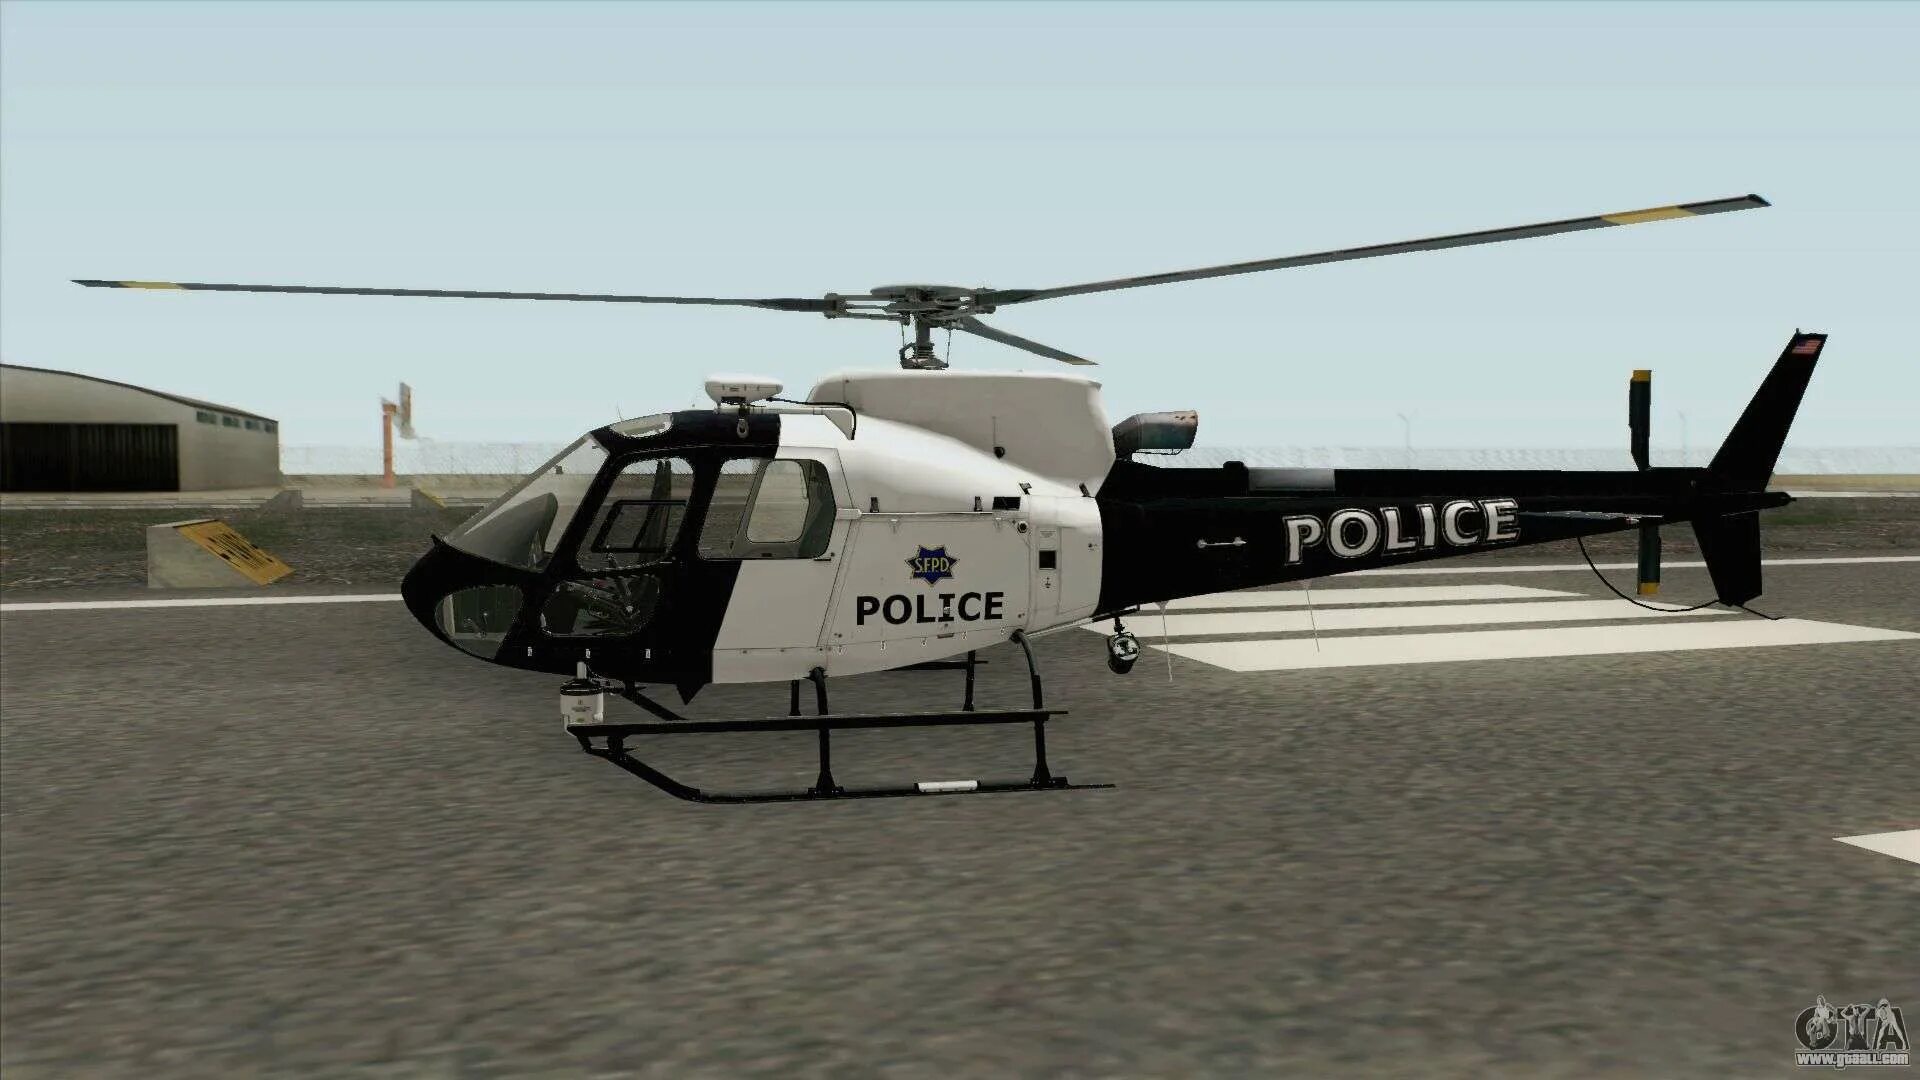 San andreas вертолет. Вертолет "Police Maverick" (GTA sa). Вертолет Маверик ГТА са. ГТА 5 Police Маверик вертолет. GTA San Andreas вертолет.